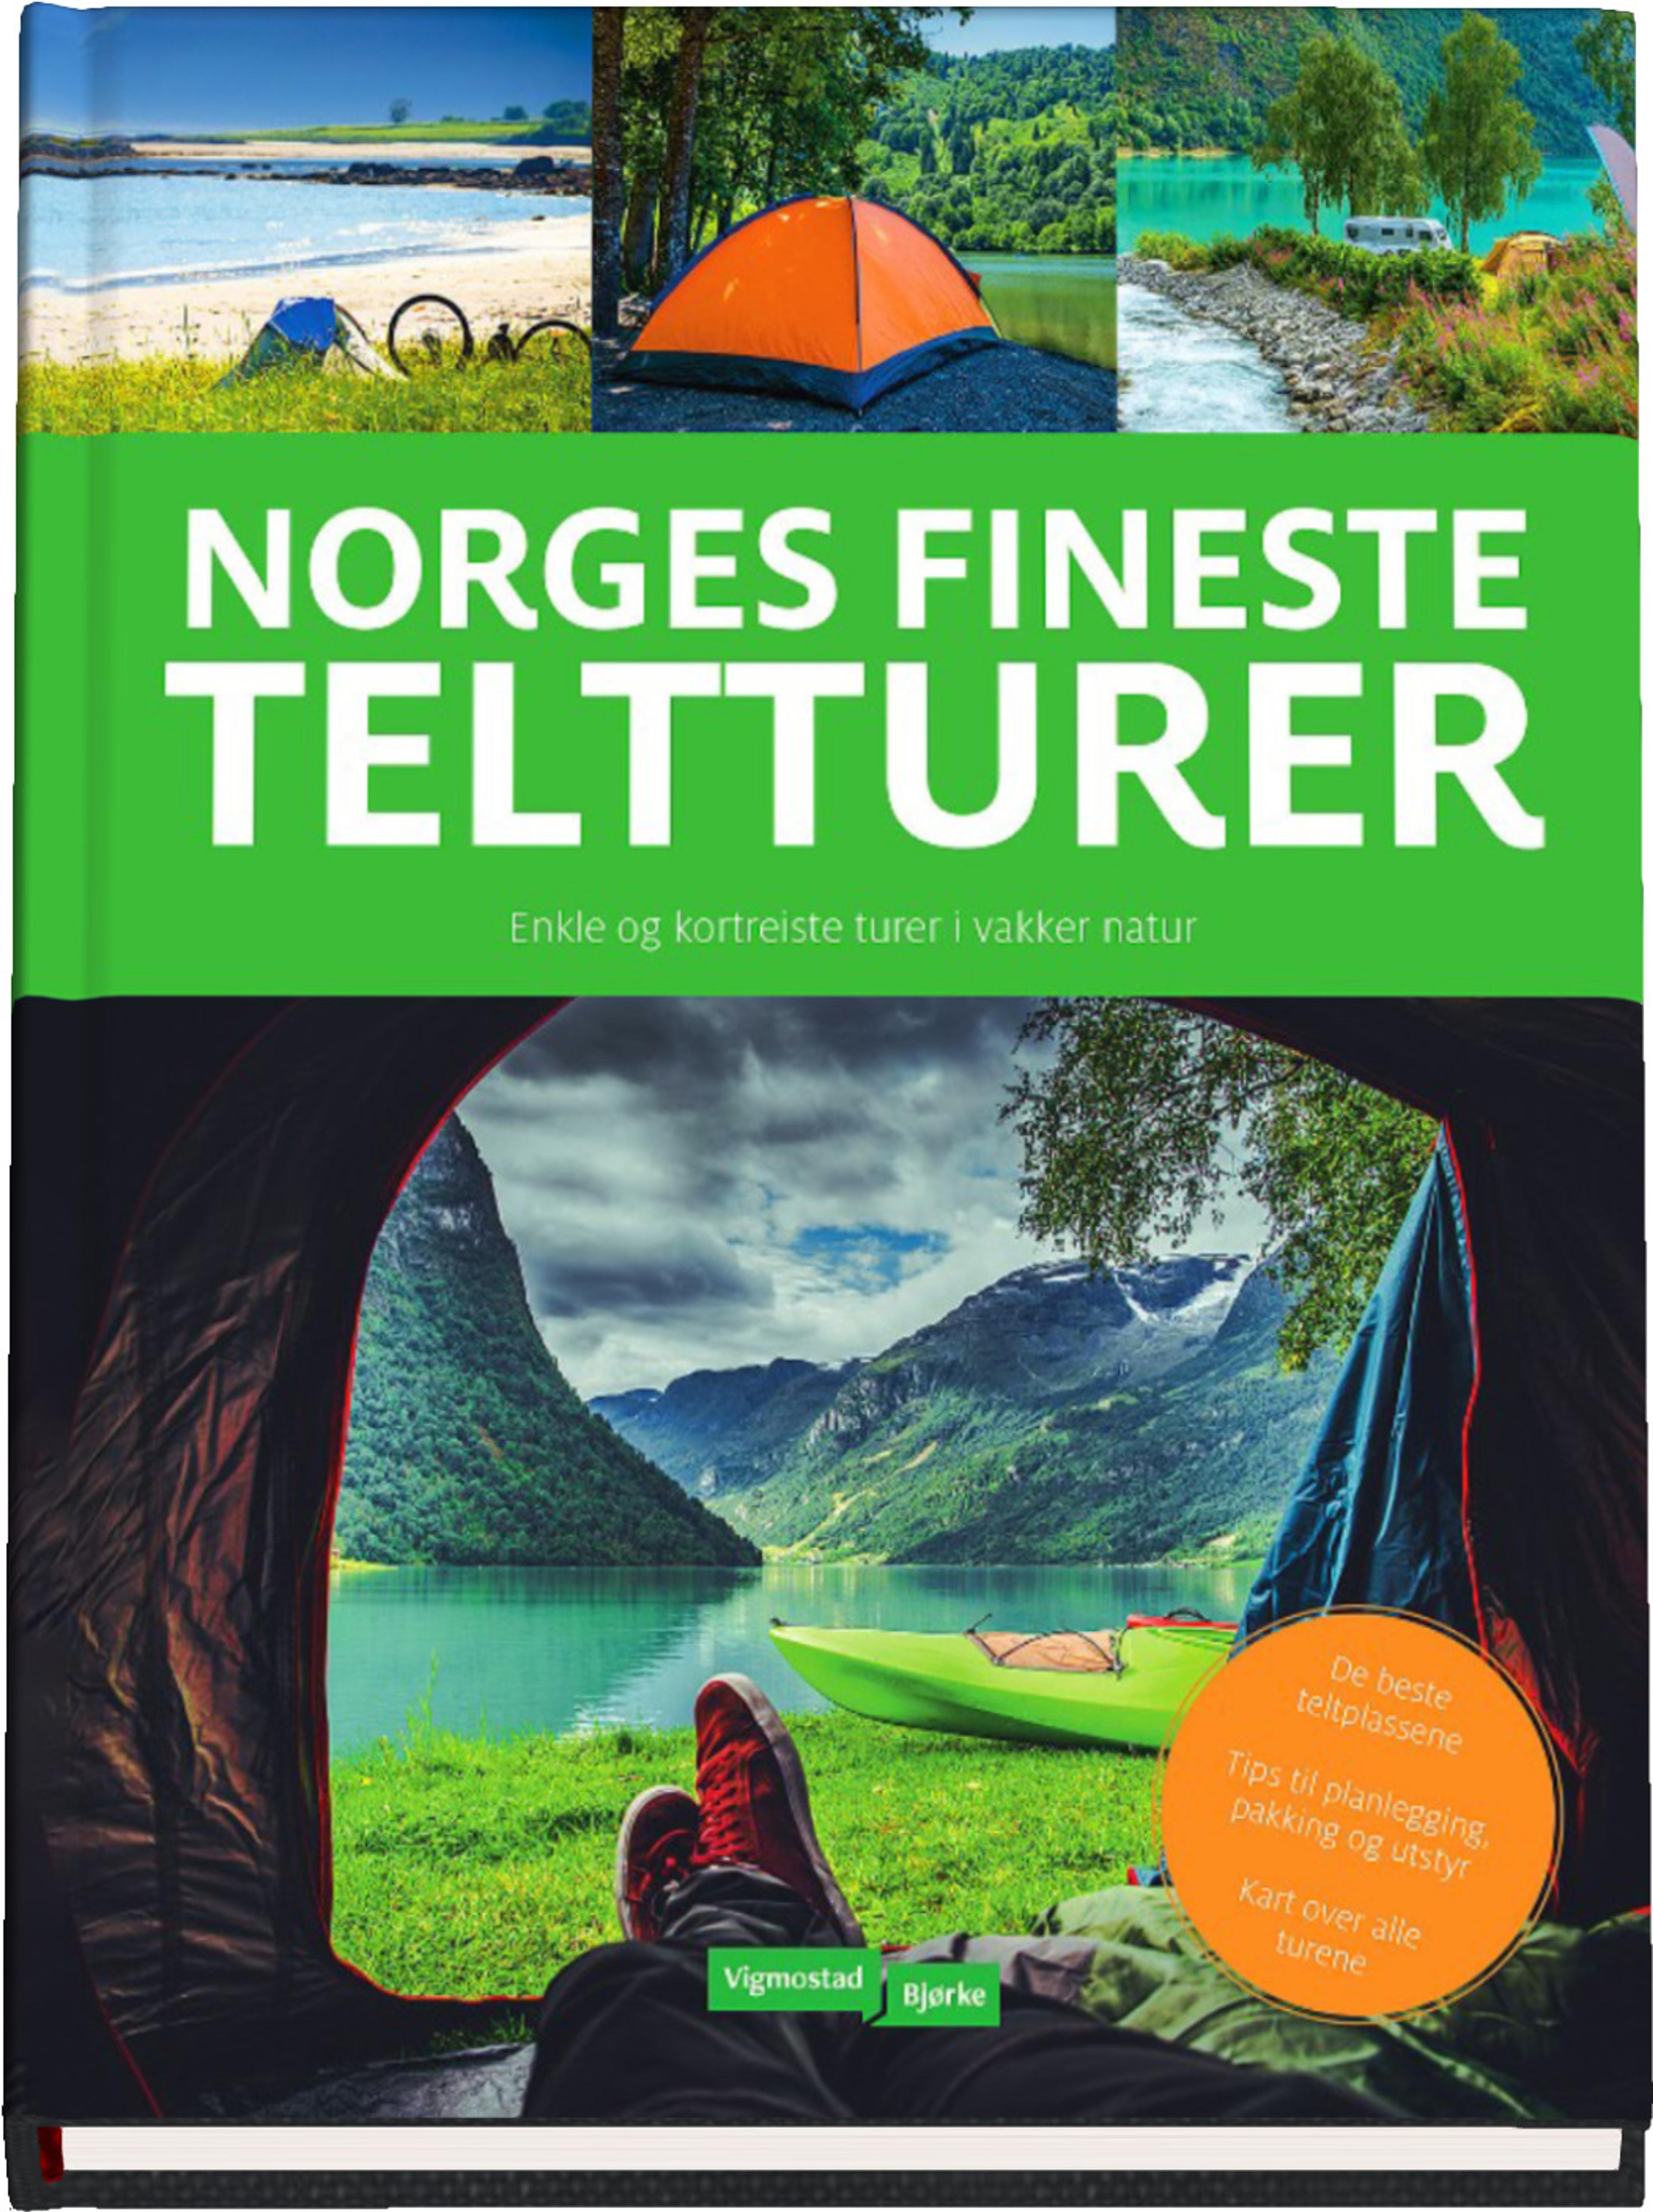 Norges fineste teltturer om Norgesferien av Terje Karlung